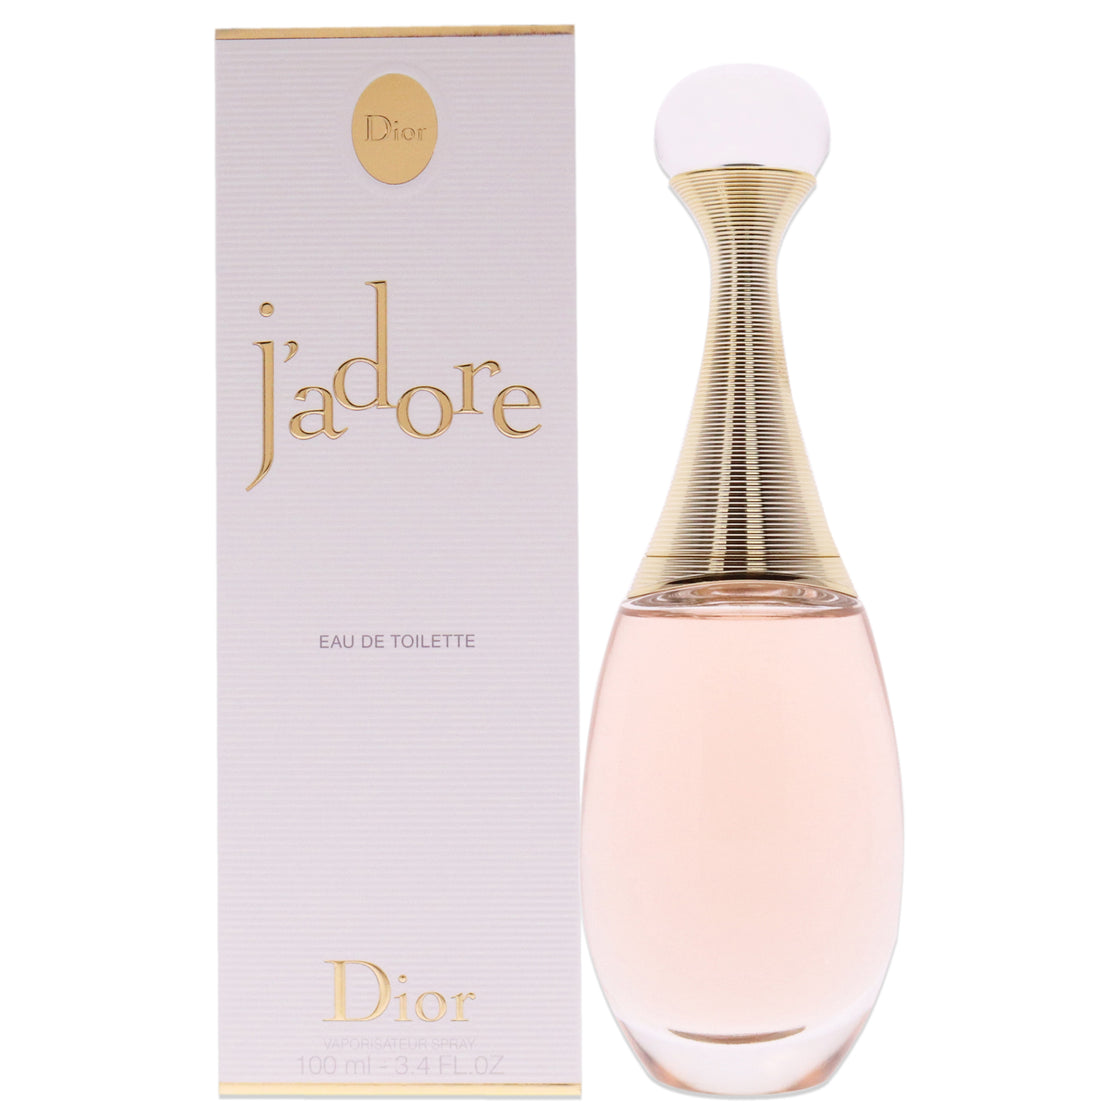 Jadore by Christian Dior for Women - 3.4 oz EDT Spray